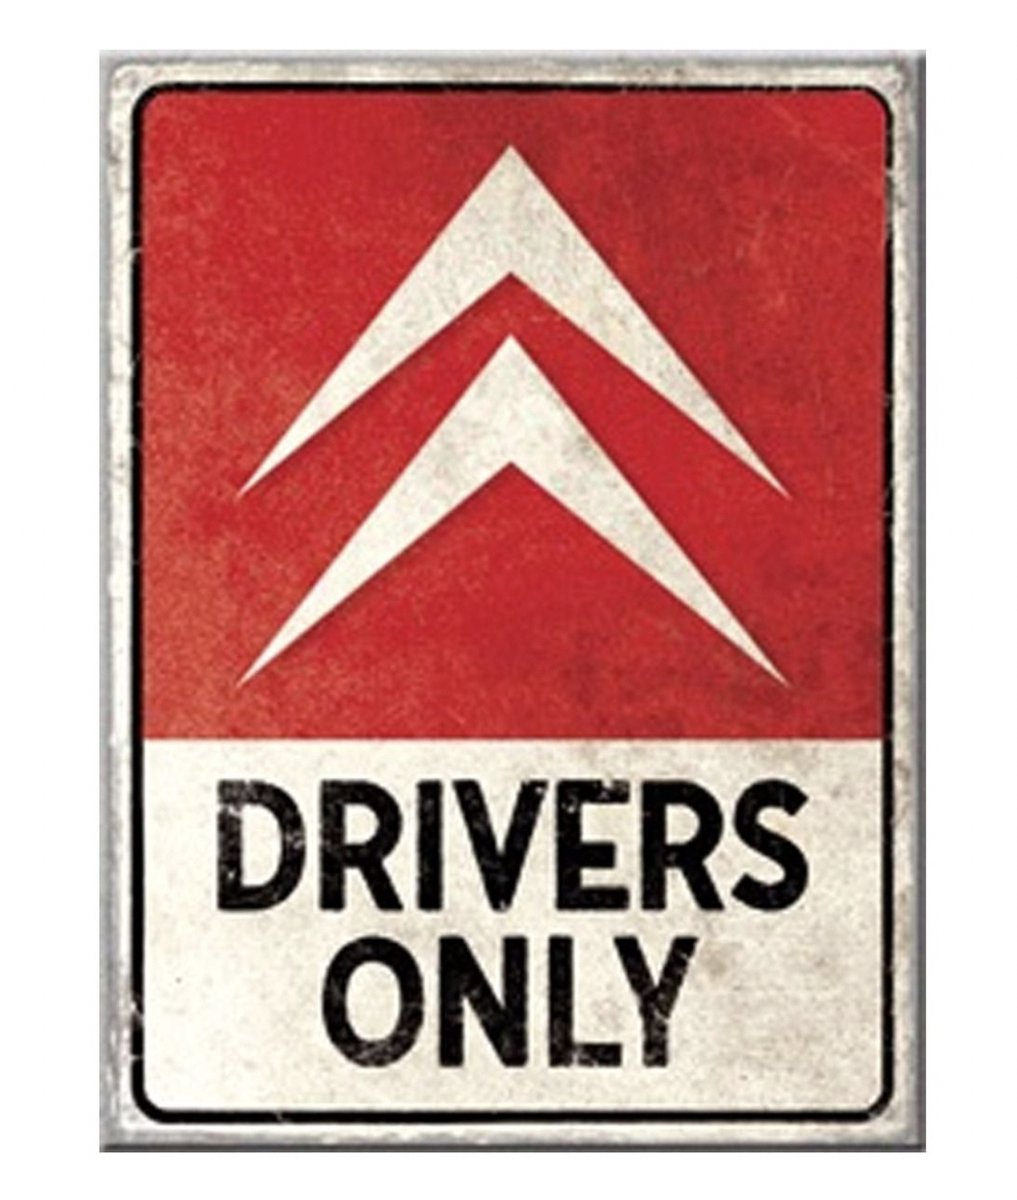 Magneet Citroen Drivers Only